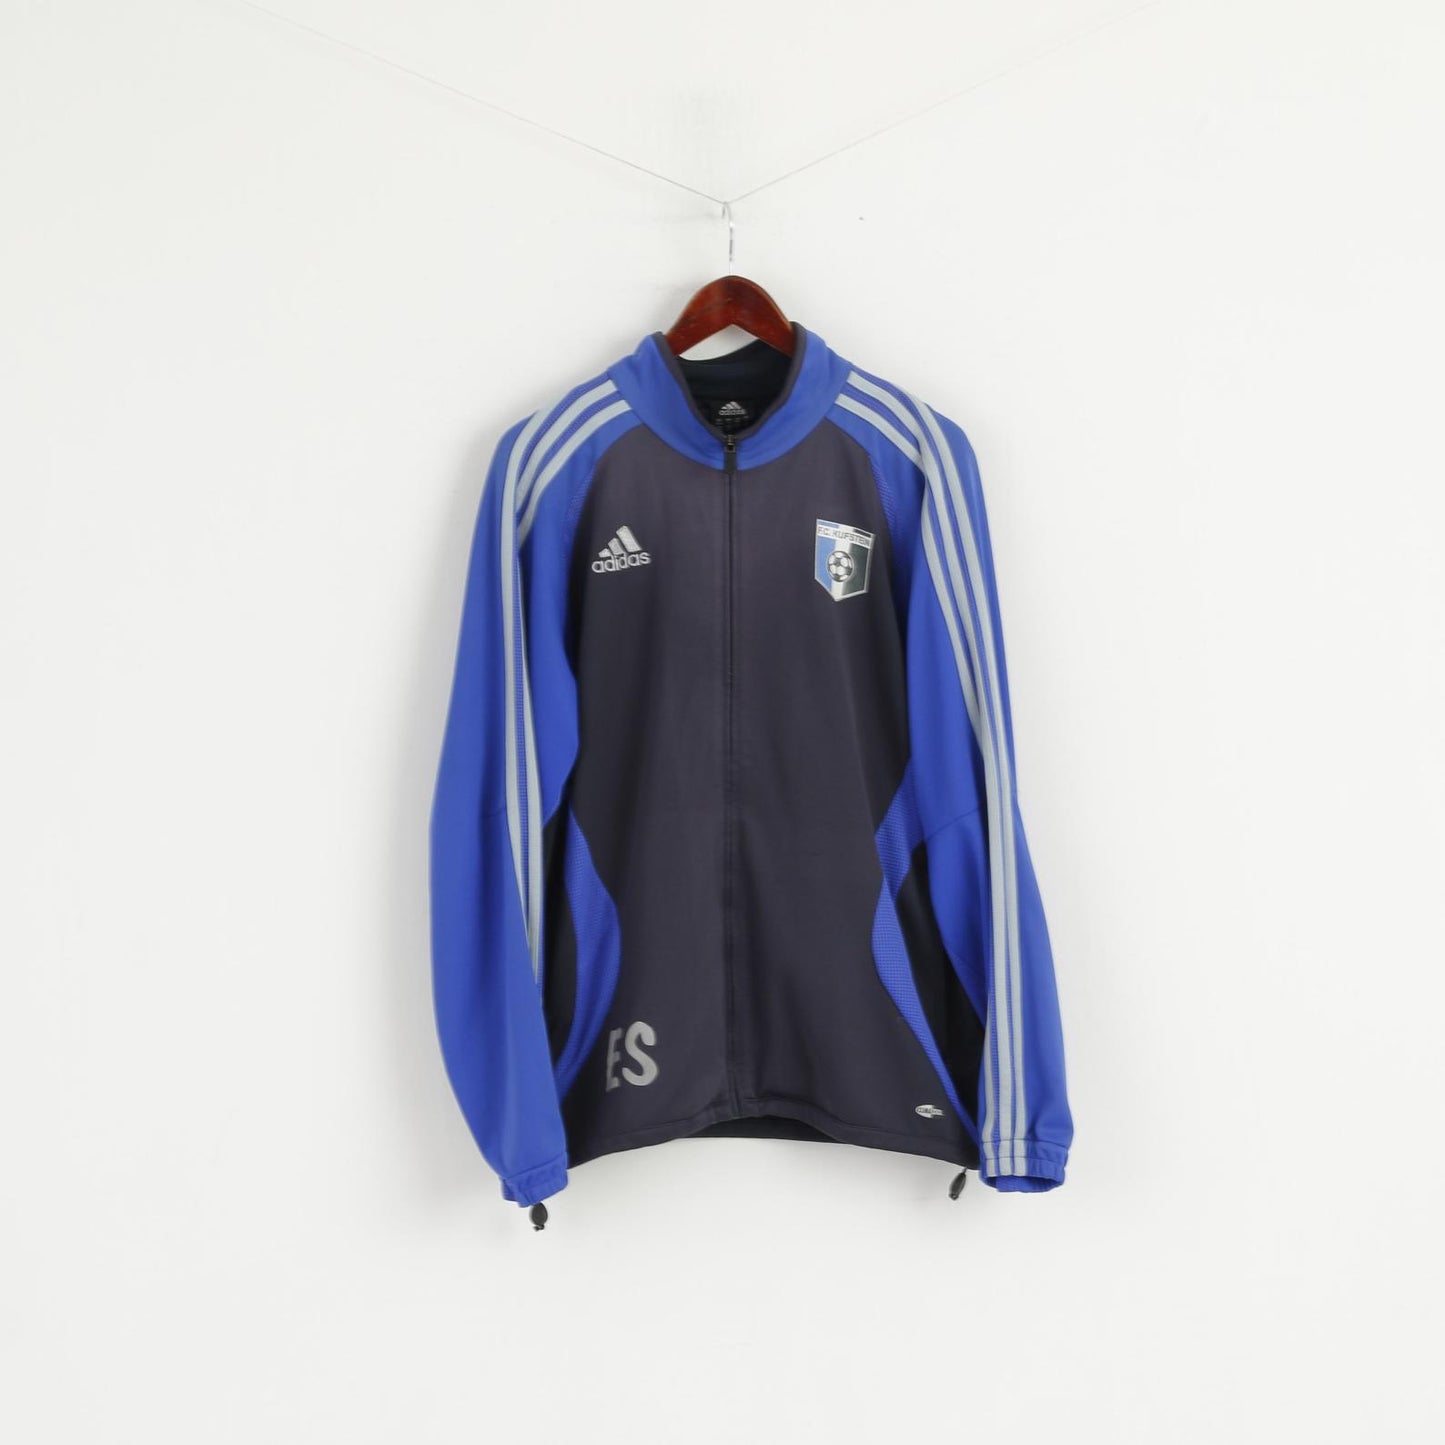 Adidas F.C. Kufstein Men M Sweatshirt Blue Full Zipper Football Club Track Top